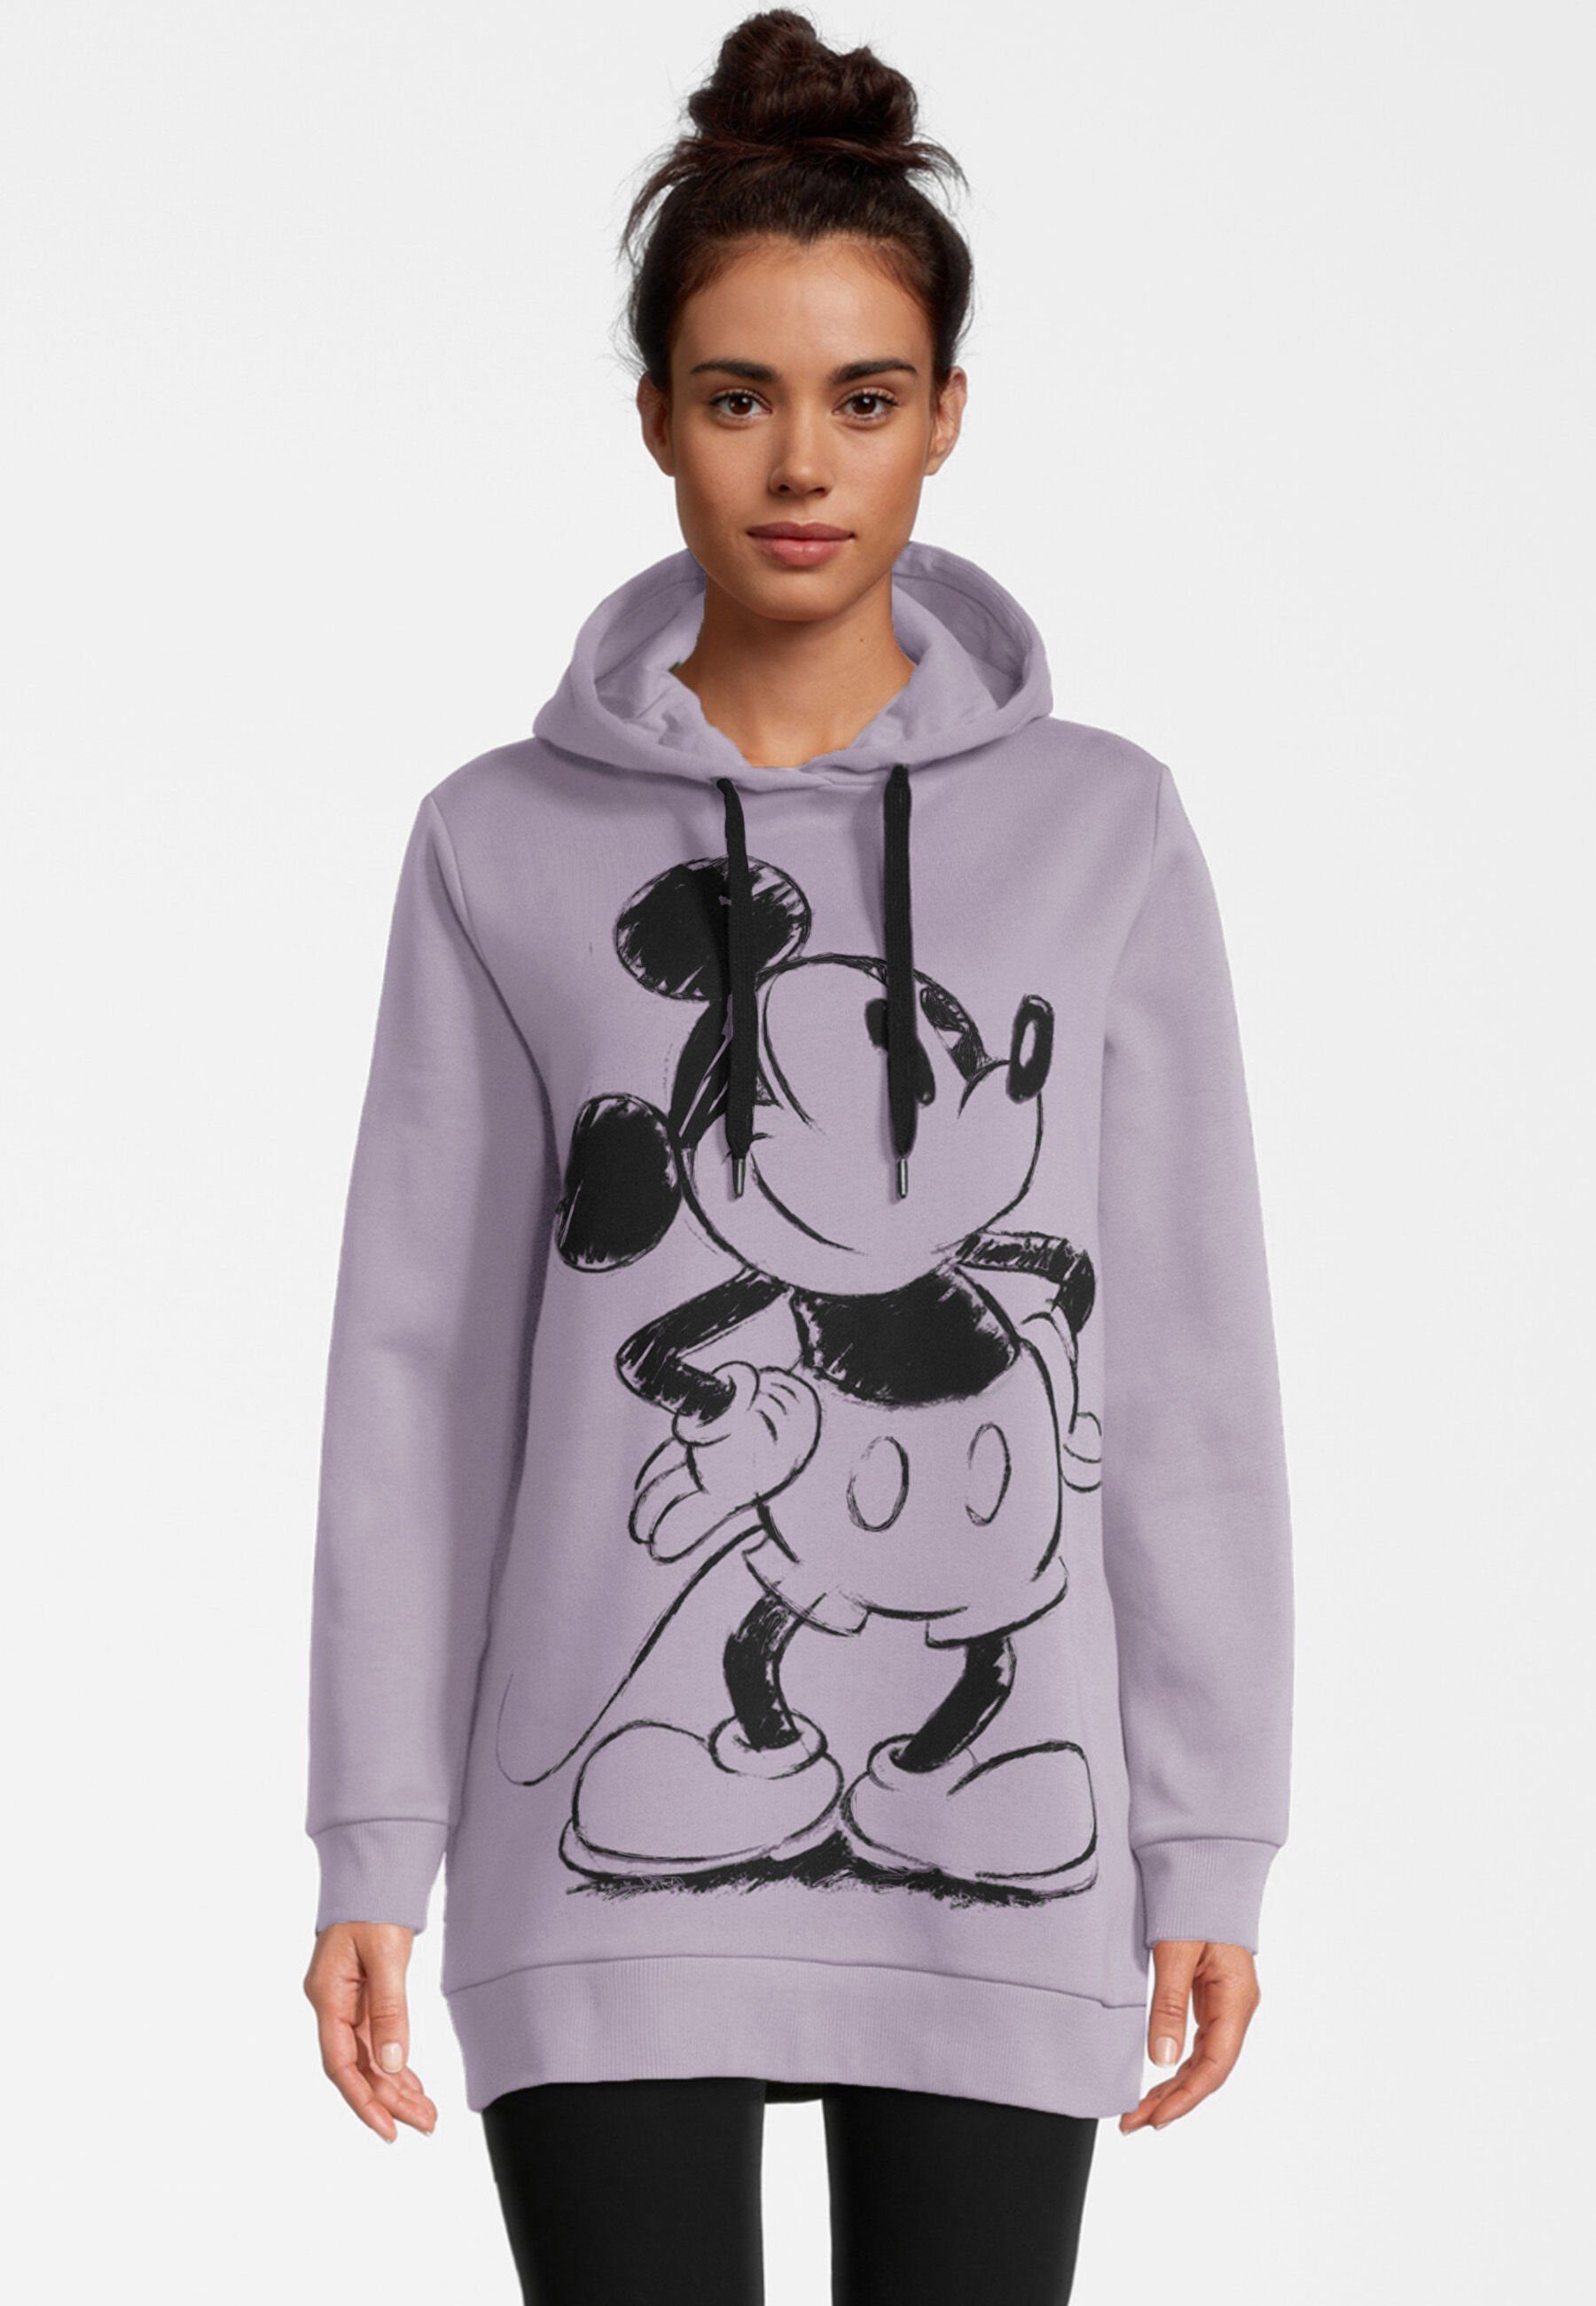 COURSE Kapuzenpullover Mickey Mouse Retro flieder | Hoodies